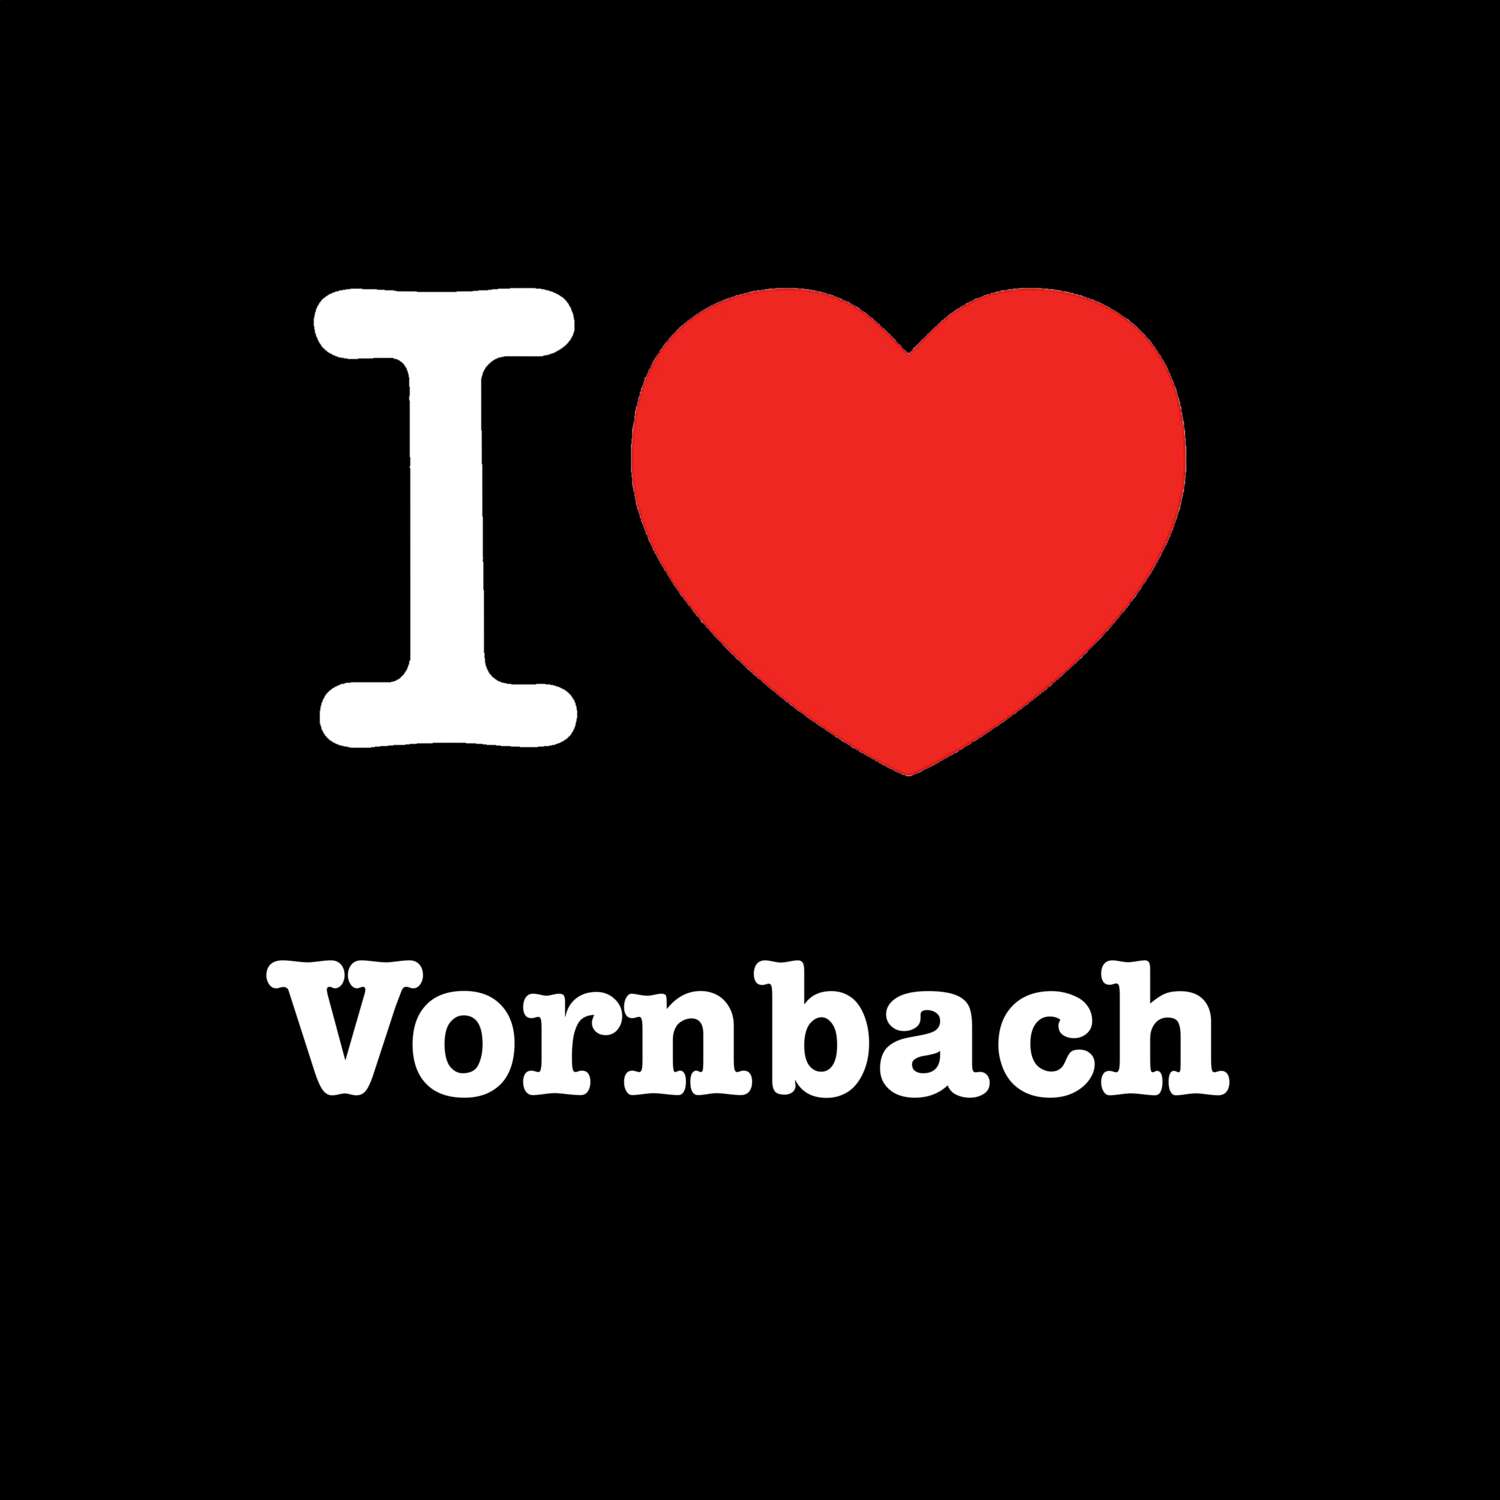 Vornbach T-Shirt »I love«